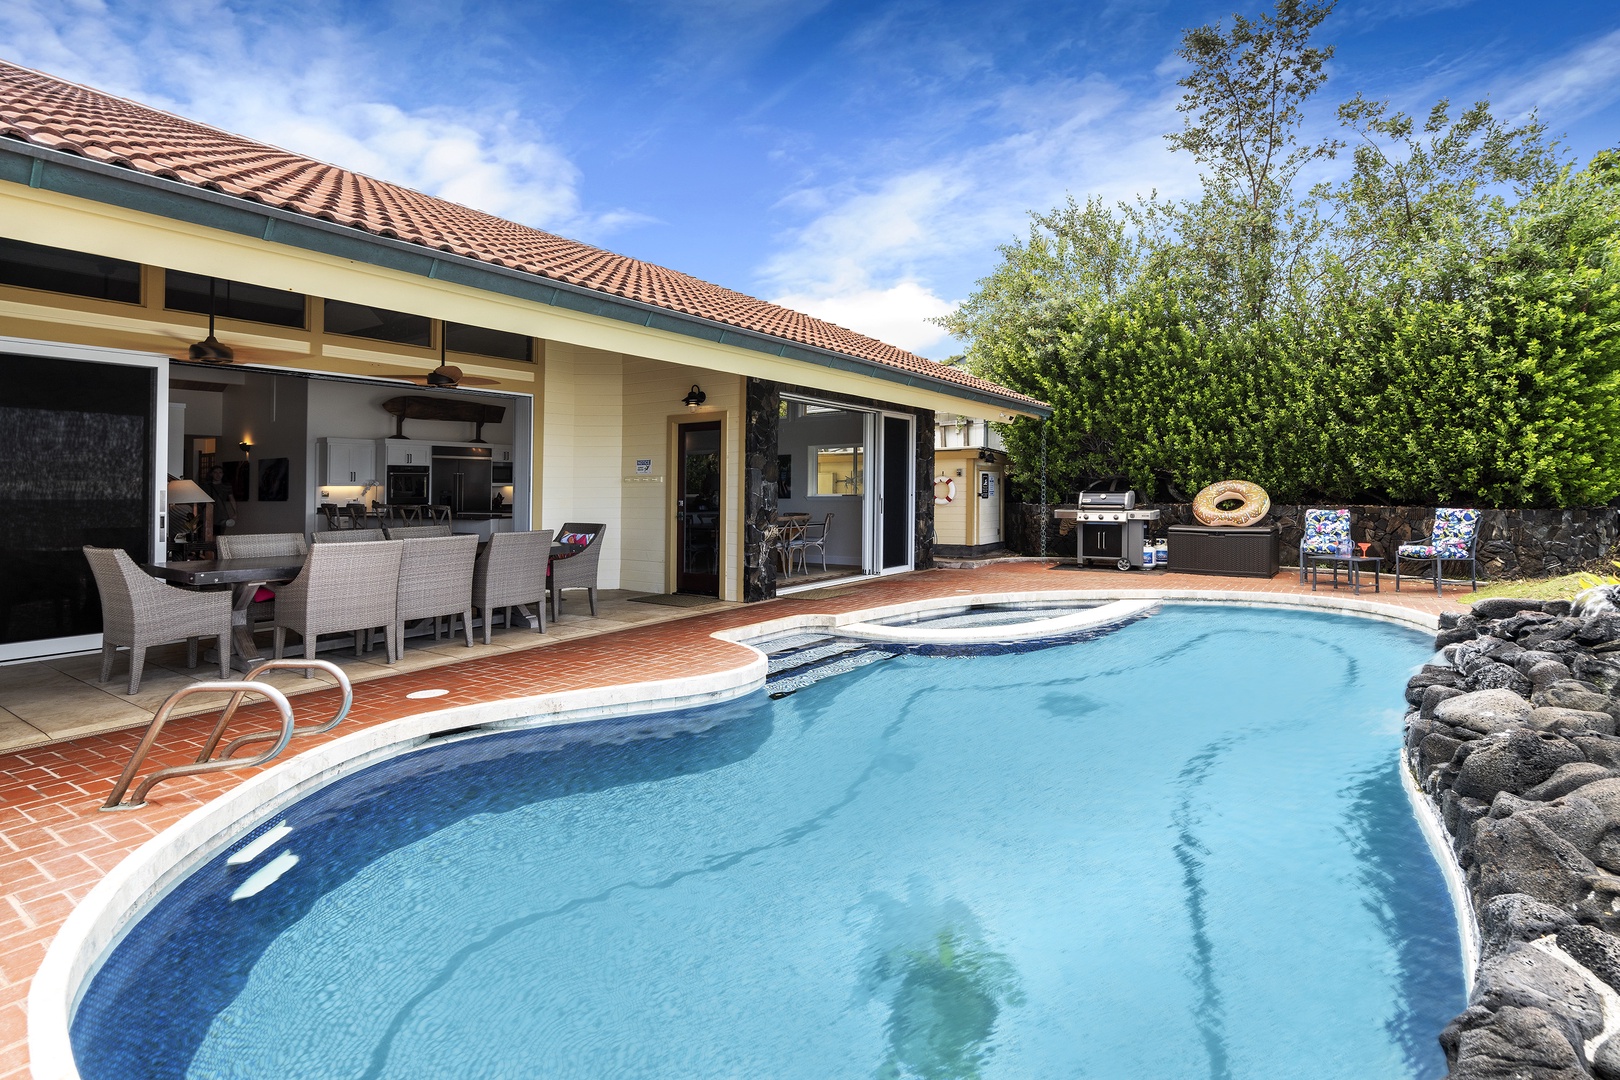 Kailua Kona Vacation Rentals, Hale Pua - Solar heated pool will be enjoyed by all!